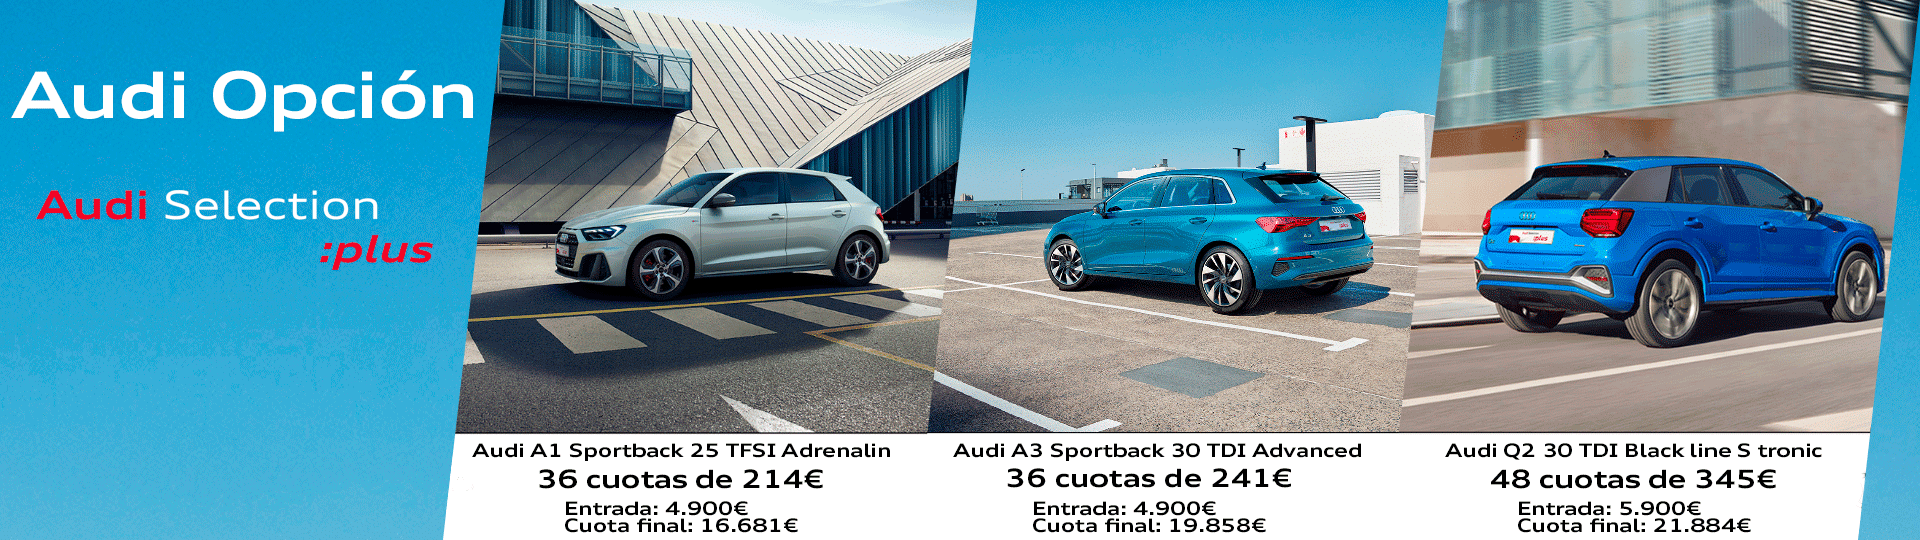 Audi-Opcion-ASP